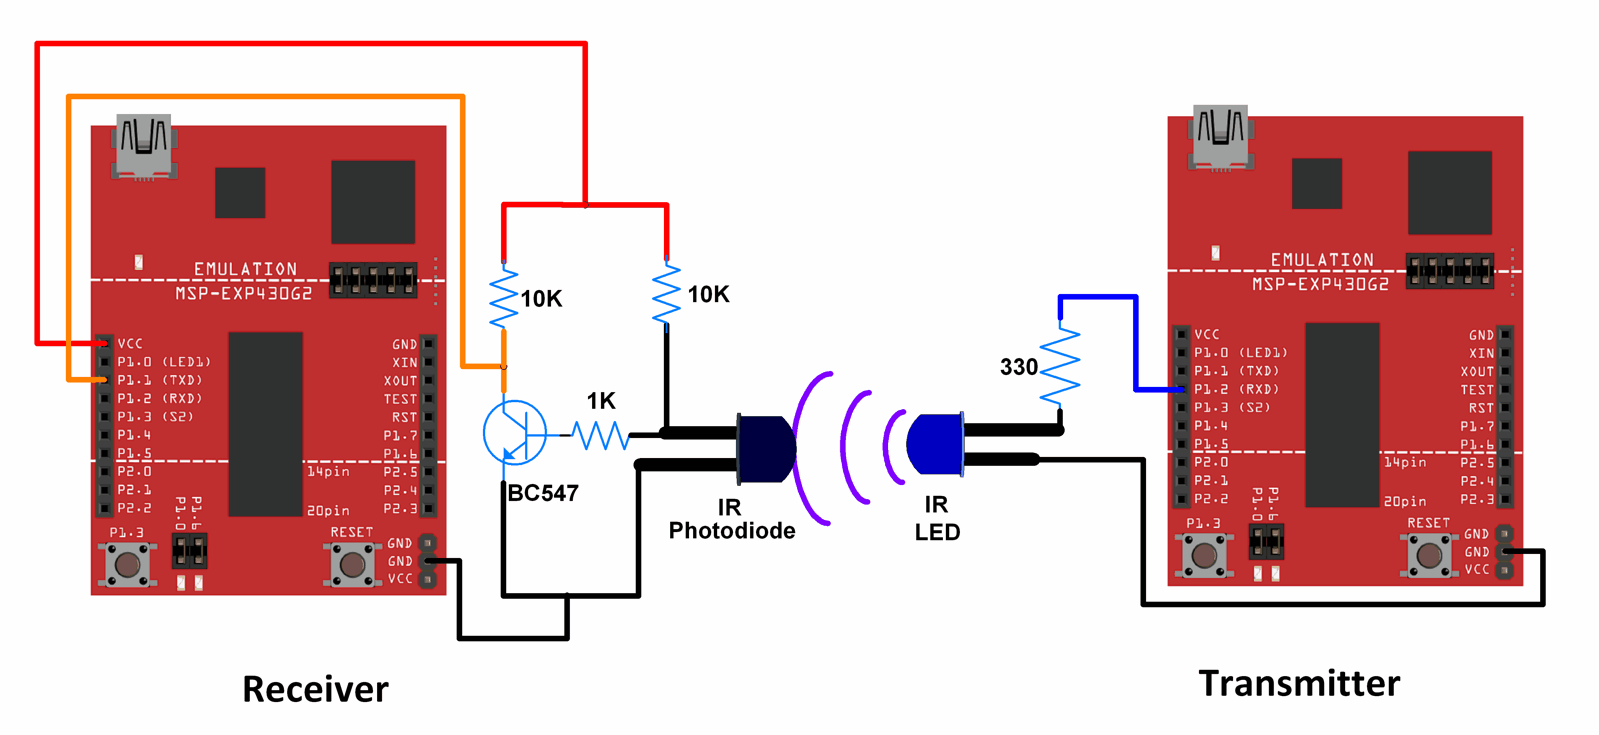 IR Communication Between IR LED And IR Photodiode Using MSP-EXP430G2 TI Launchpad